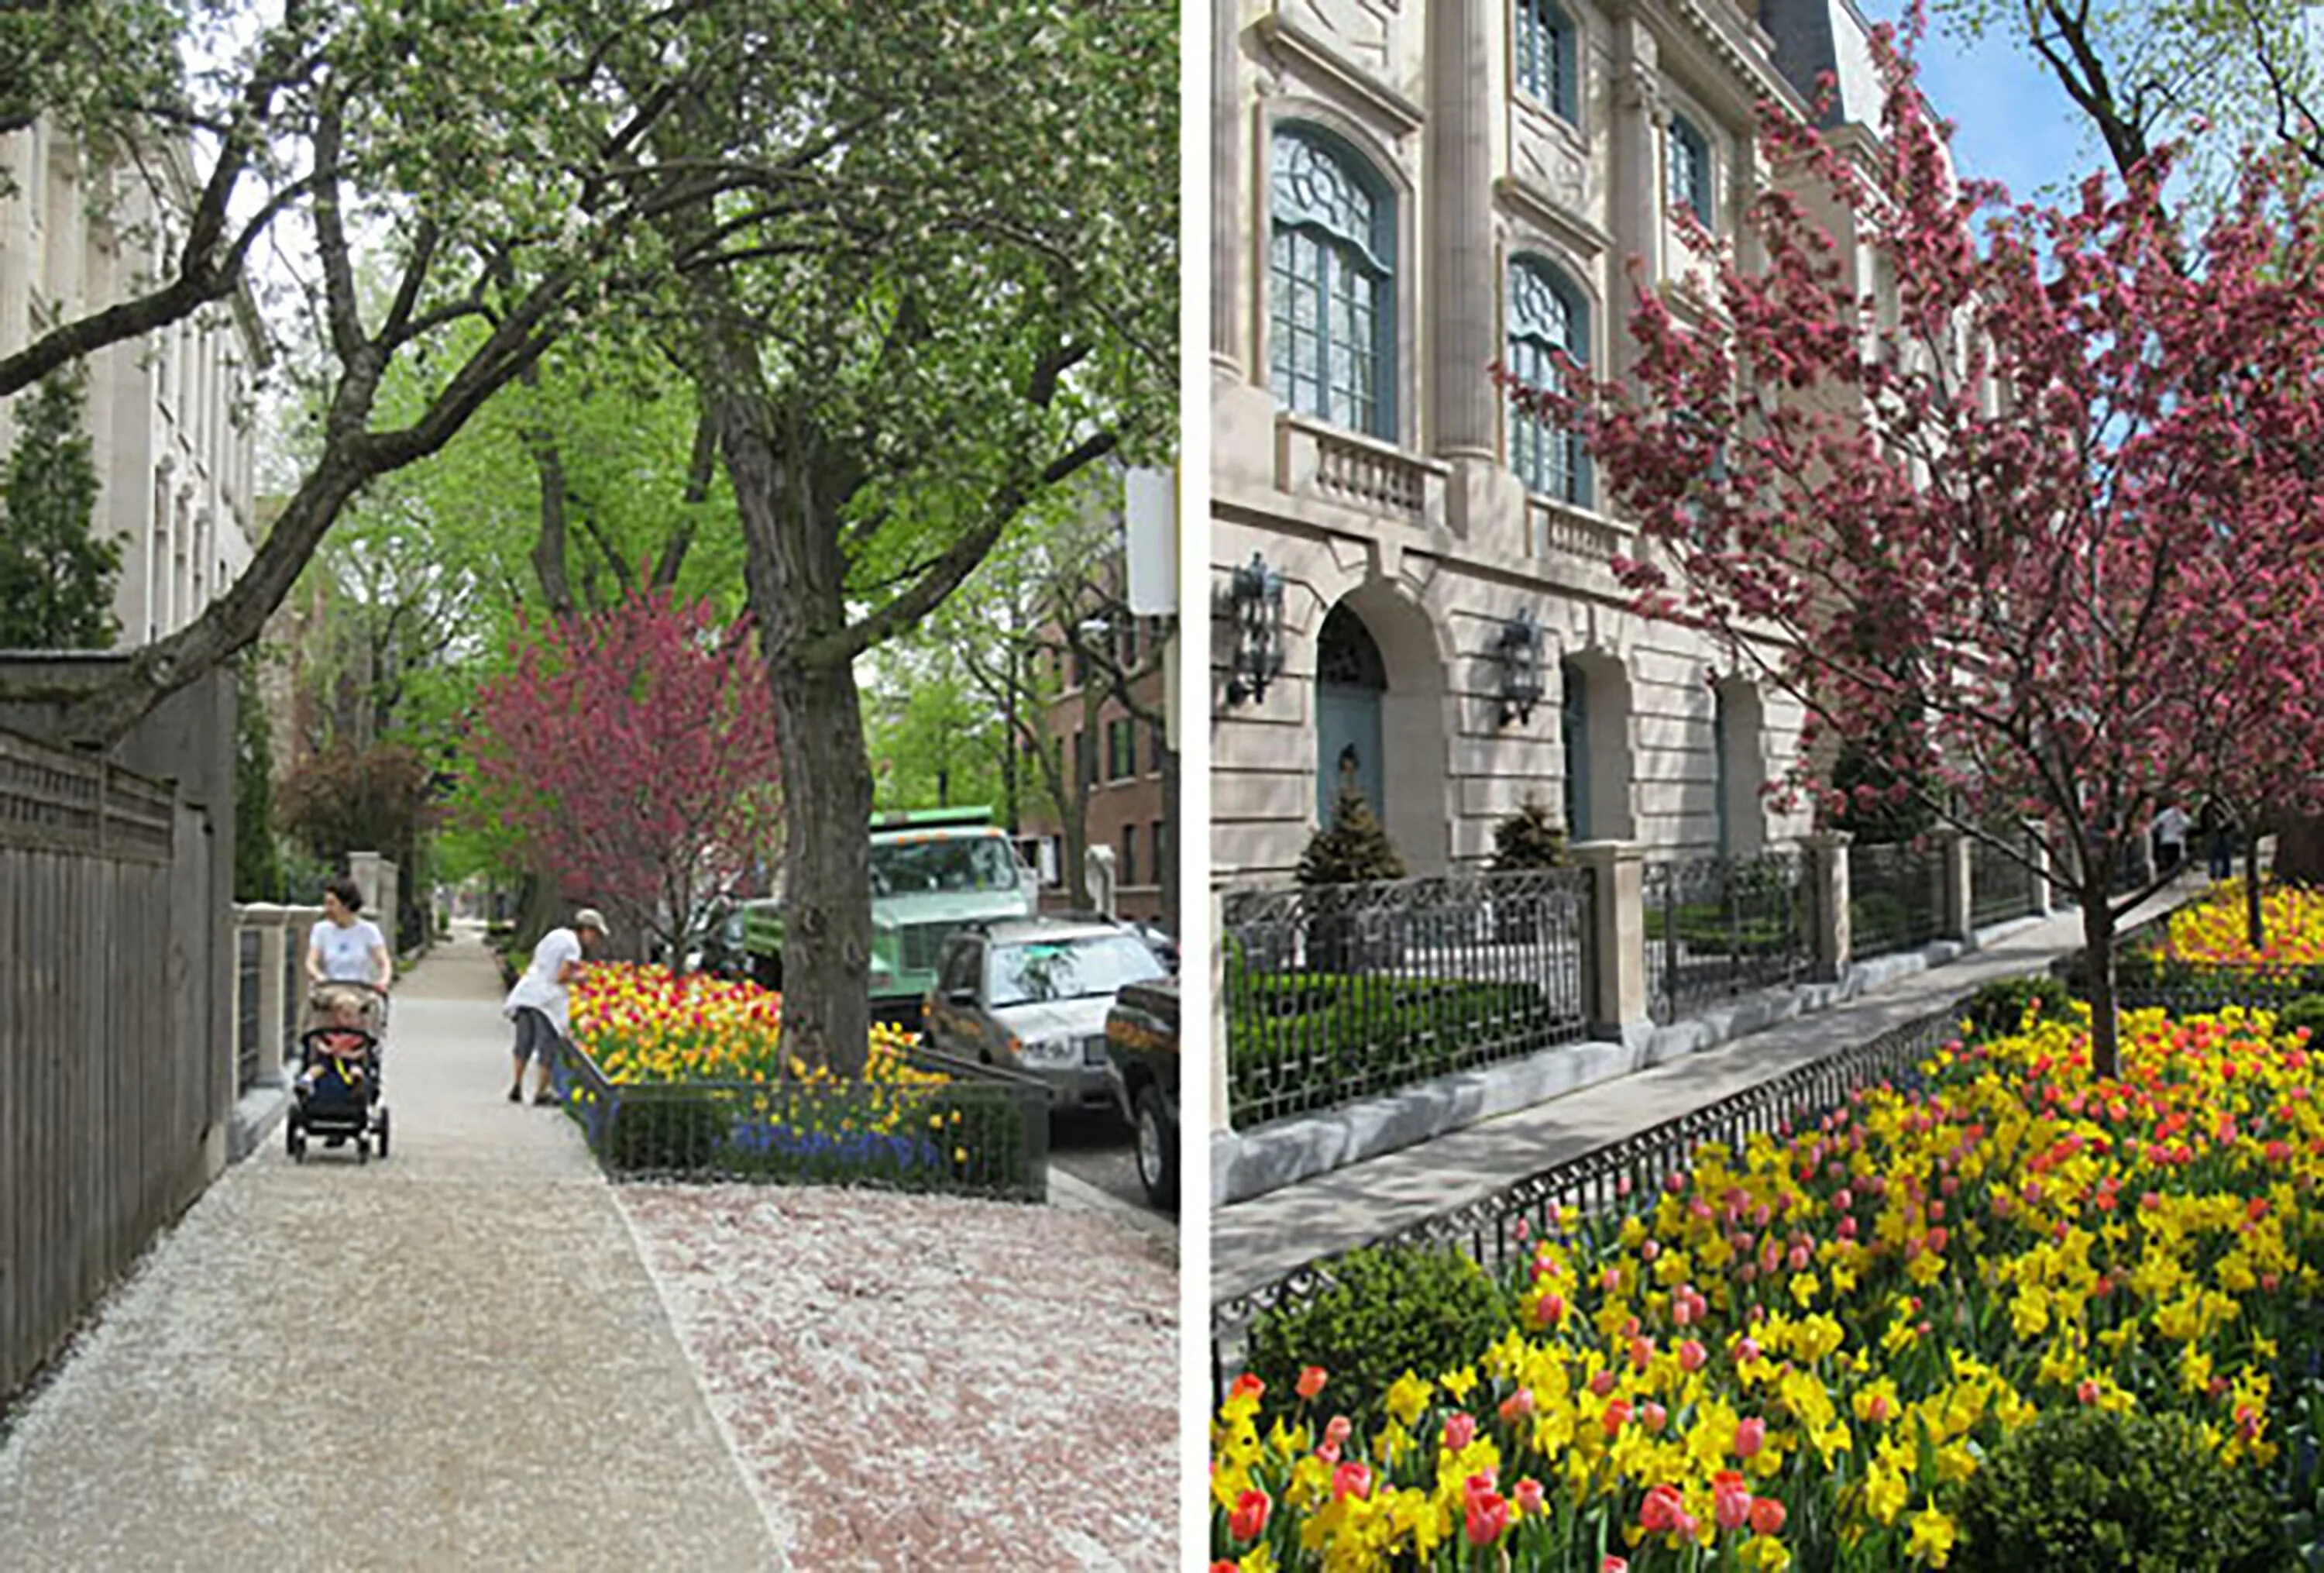 1 flowers path stroller urban parkway blog hoerrschaudt